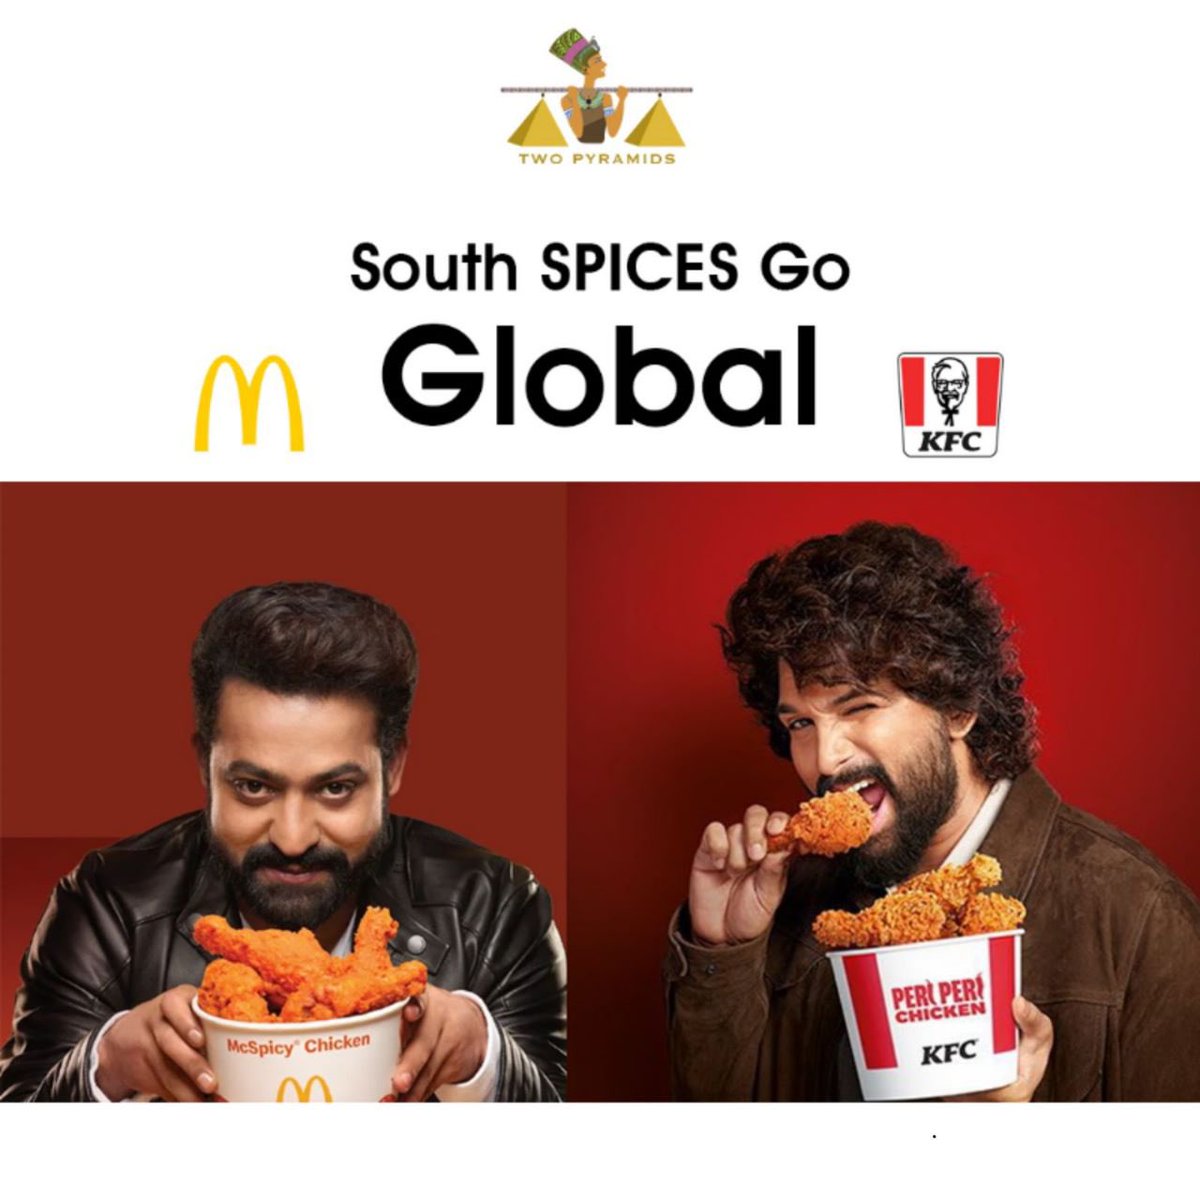 South spices 🌶️ to global 

Global brands signing South Indian stars ✨ 

#mcdonalds #mcdonaldsindia #kfc #alluarjun #ntr #mcdonaldsntr #kfcalluarjun #twopyramids #memes #marketingmemes #trending #brandambassador